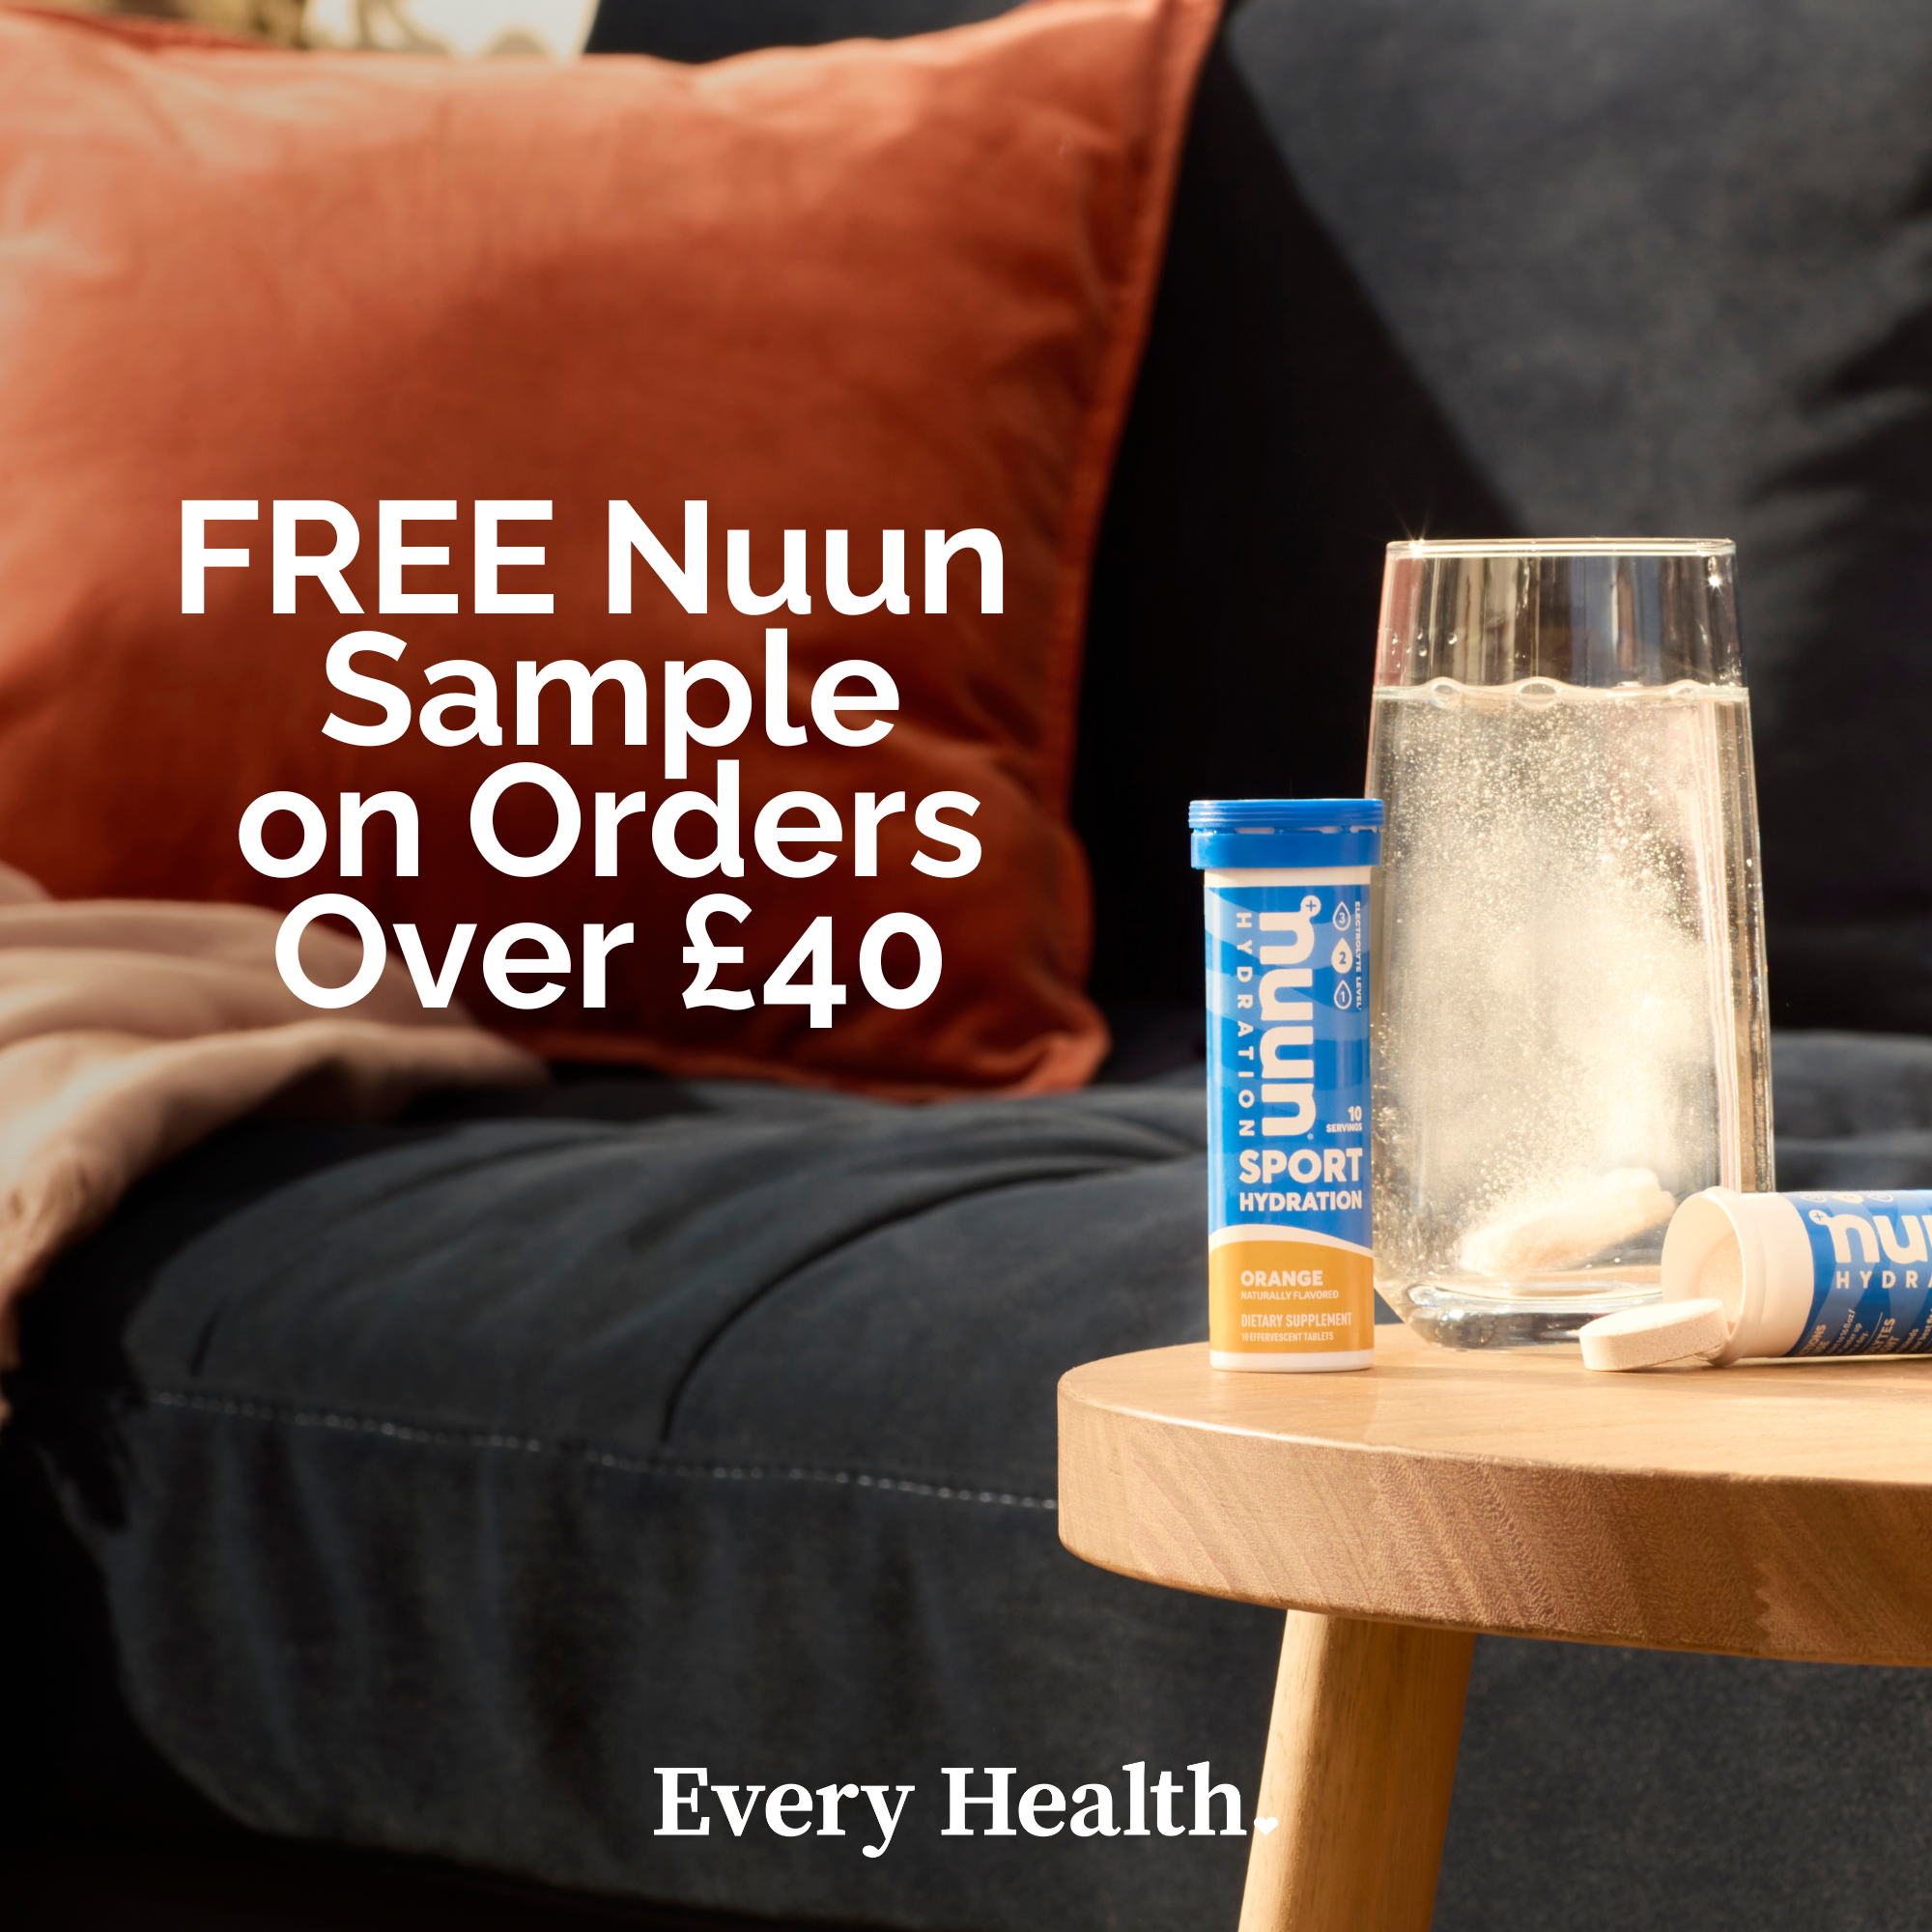 FREE Nuun Sample on Orders Over £40. EVERY HEALTH